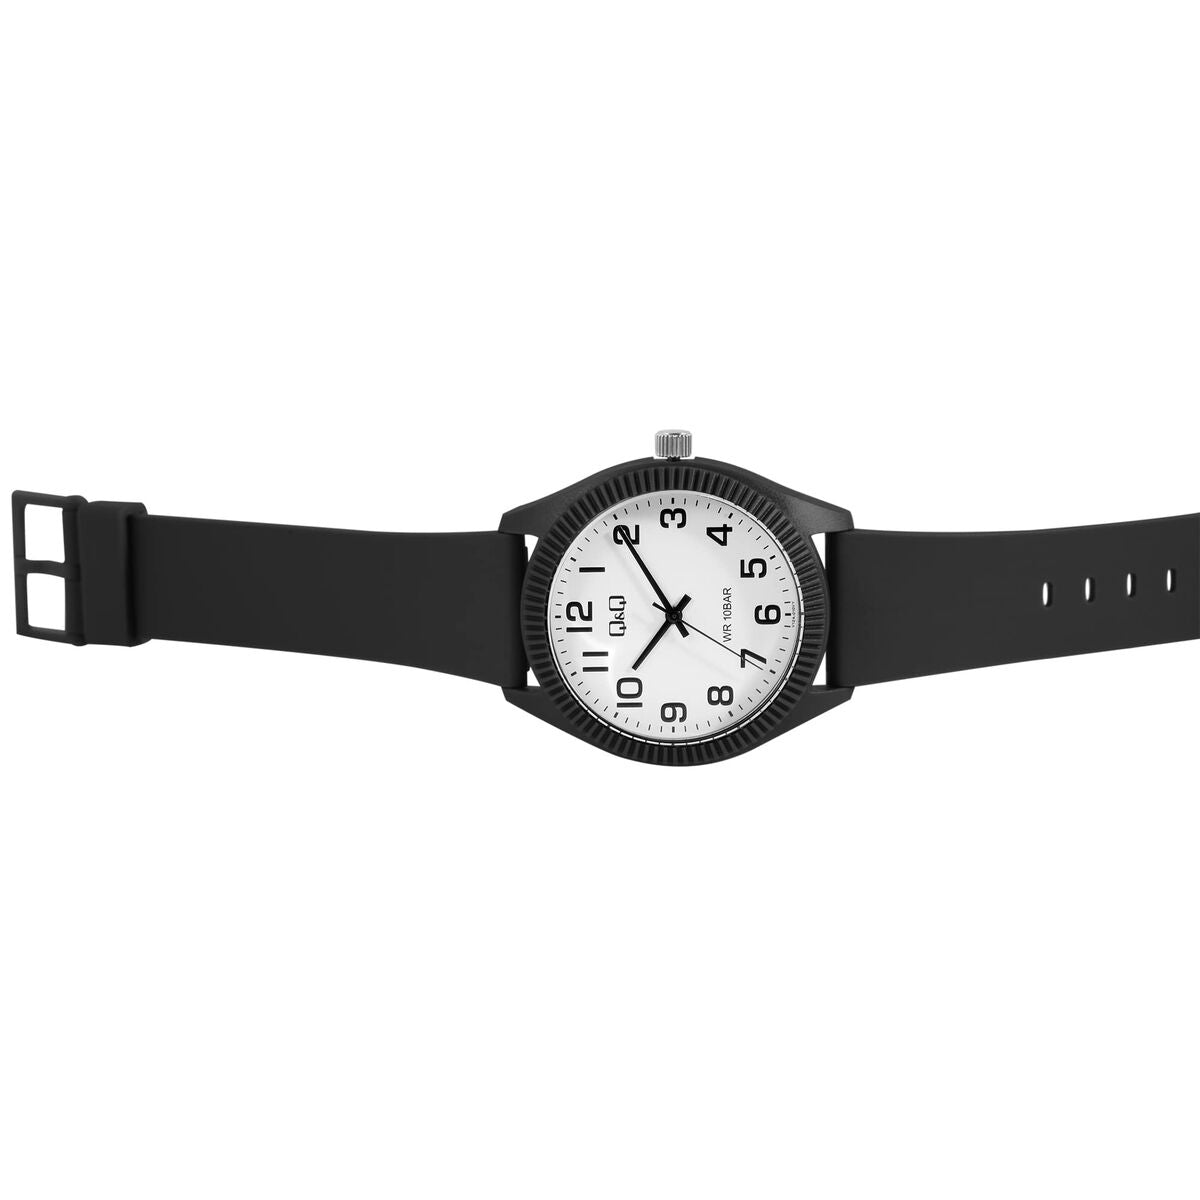 Kaufe Unisex-Uhr Q&Q V12A-010VY (Ø 41 mm) bei AWK Flagship um € 53.00